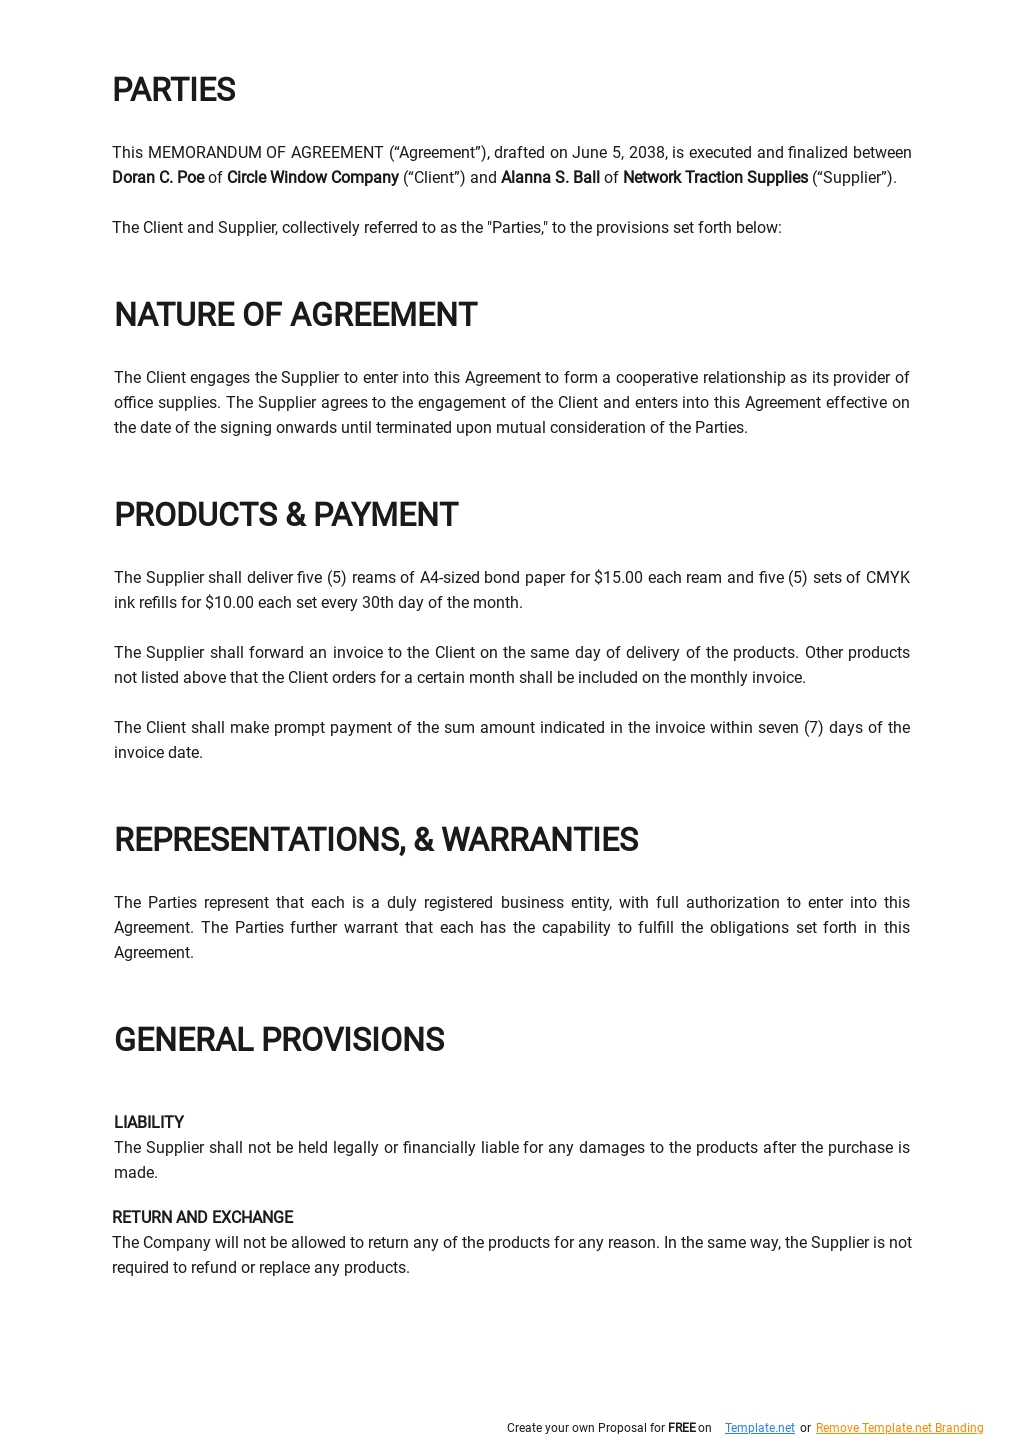 Basic Memorandum of Agreement Template 1.jpe